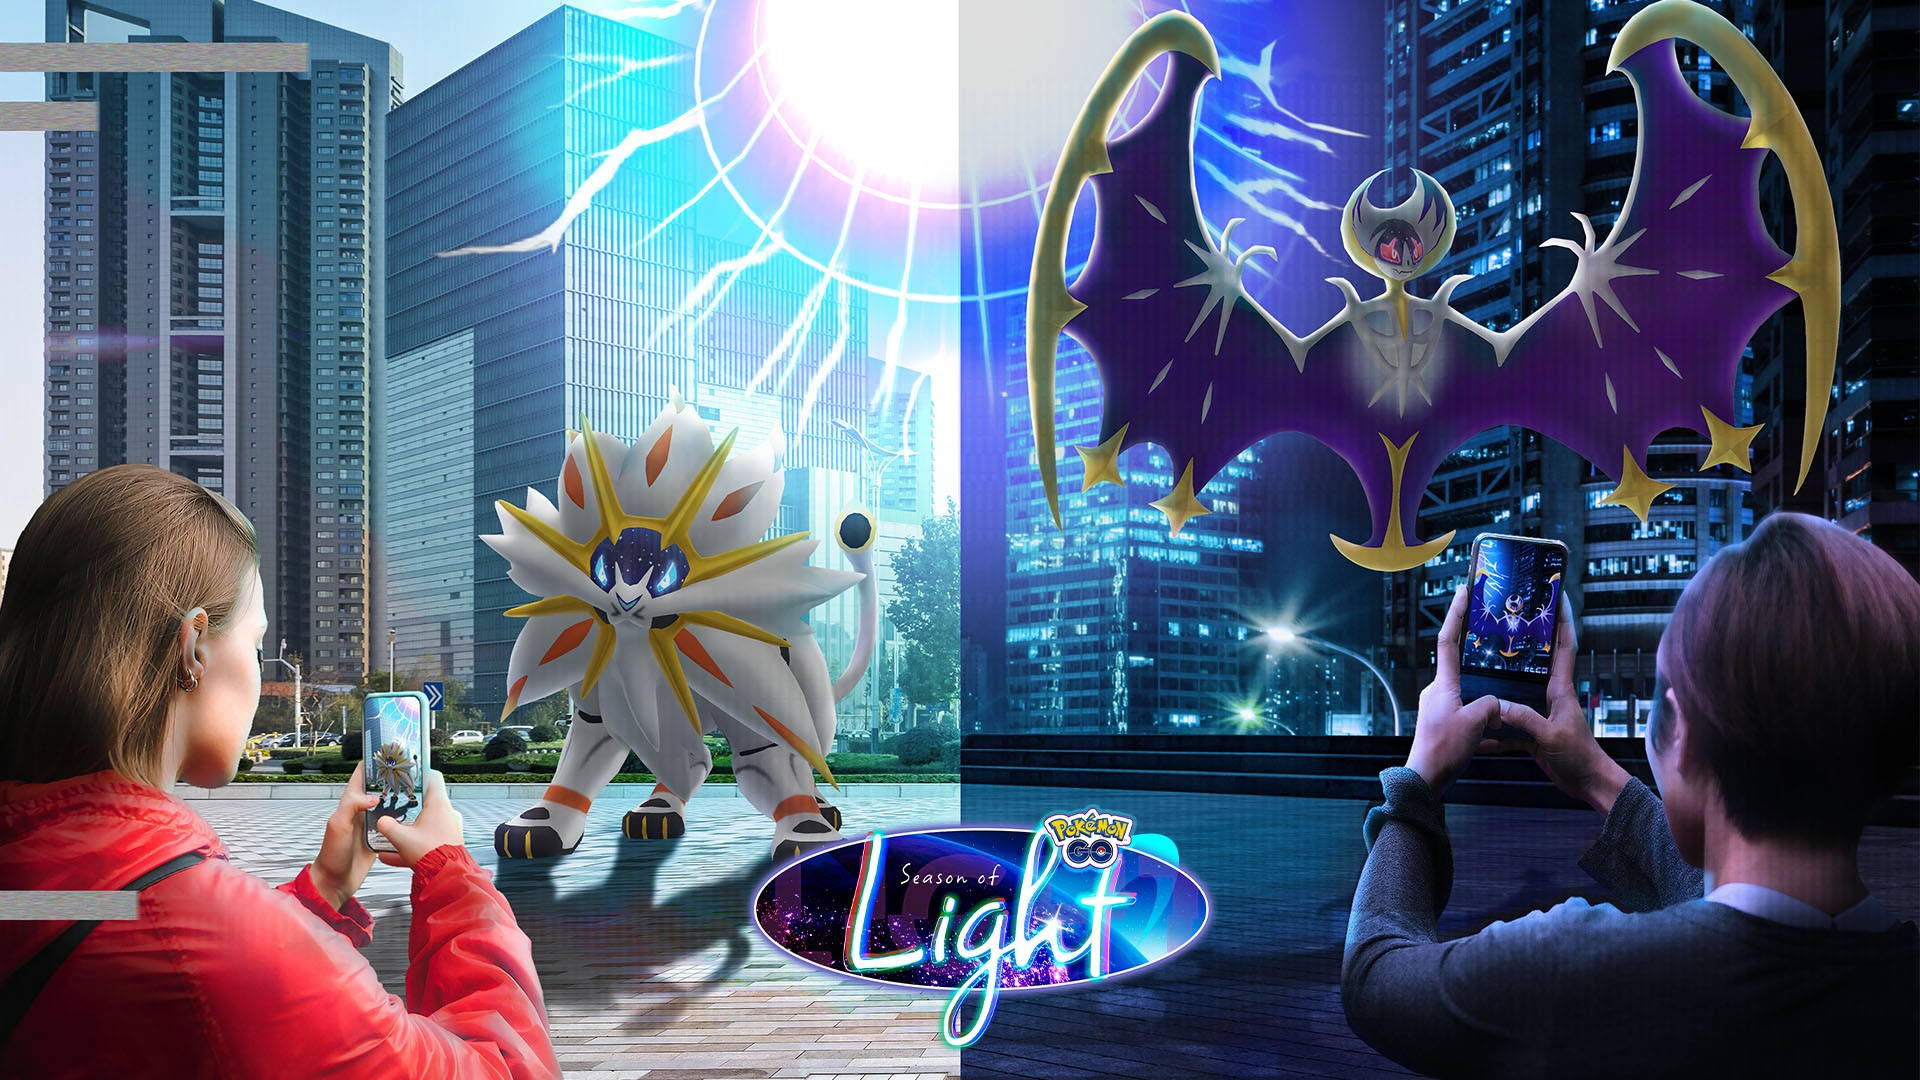 Solgaleo vs Lunala Astral Battle 😂 pokemon go. 